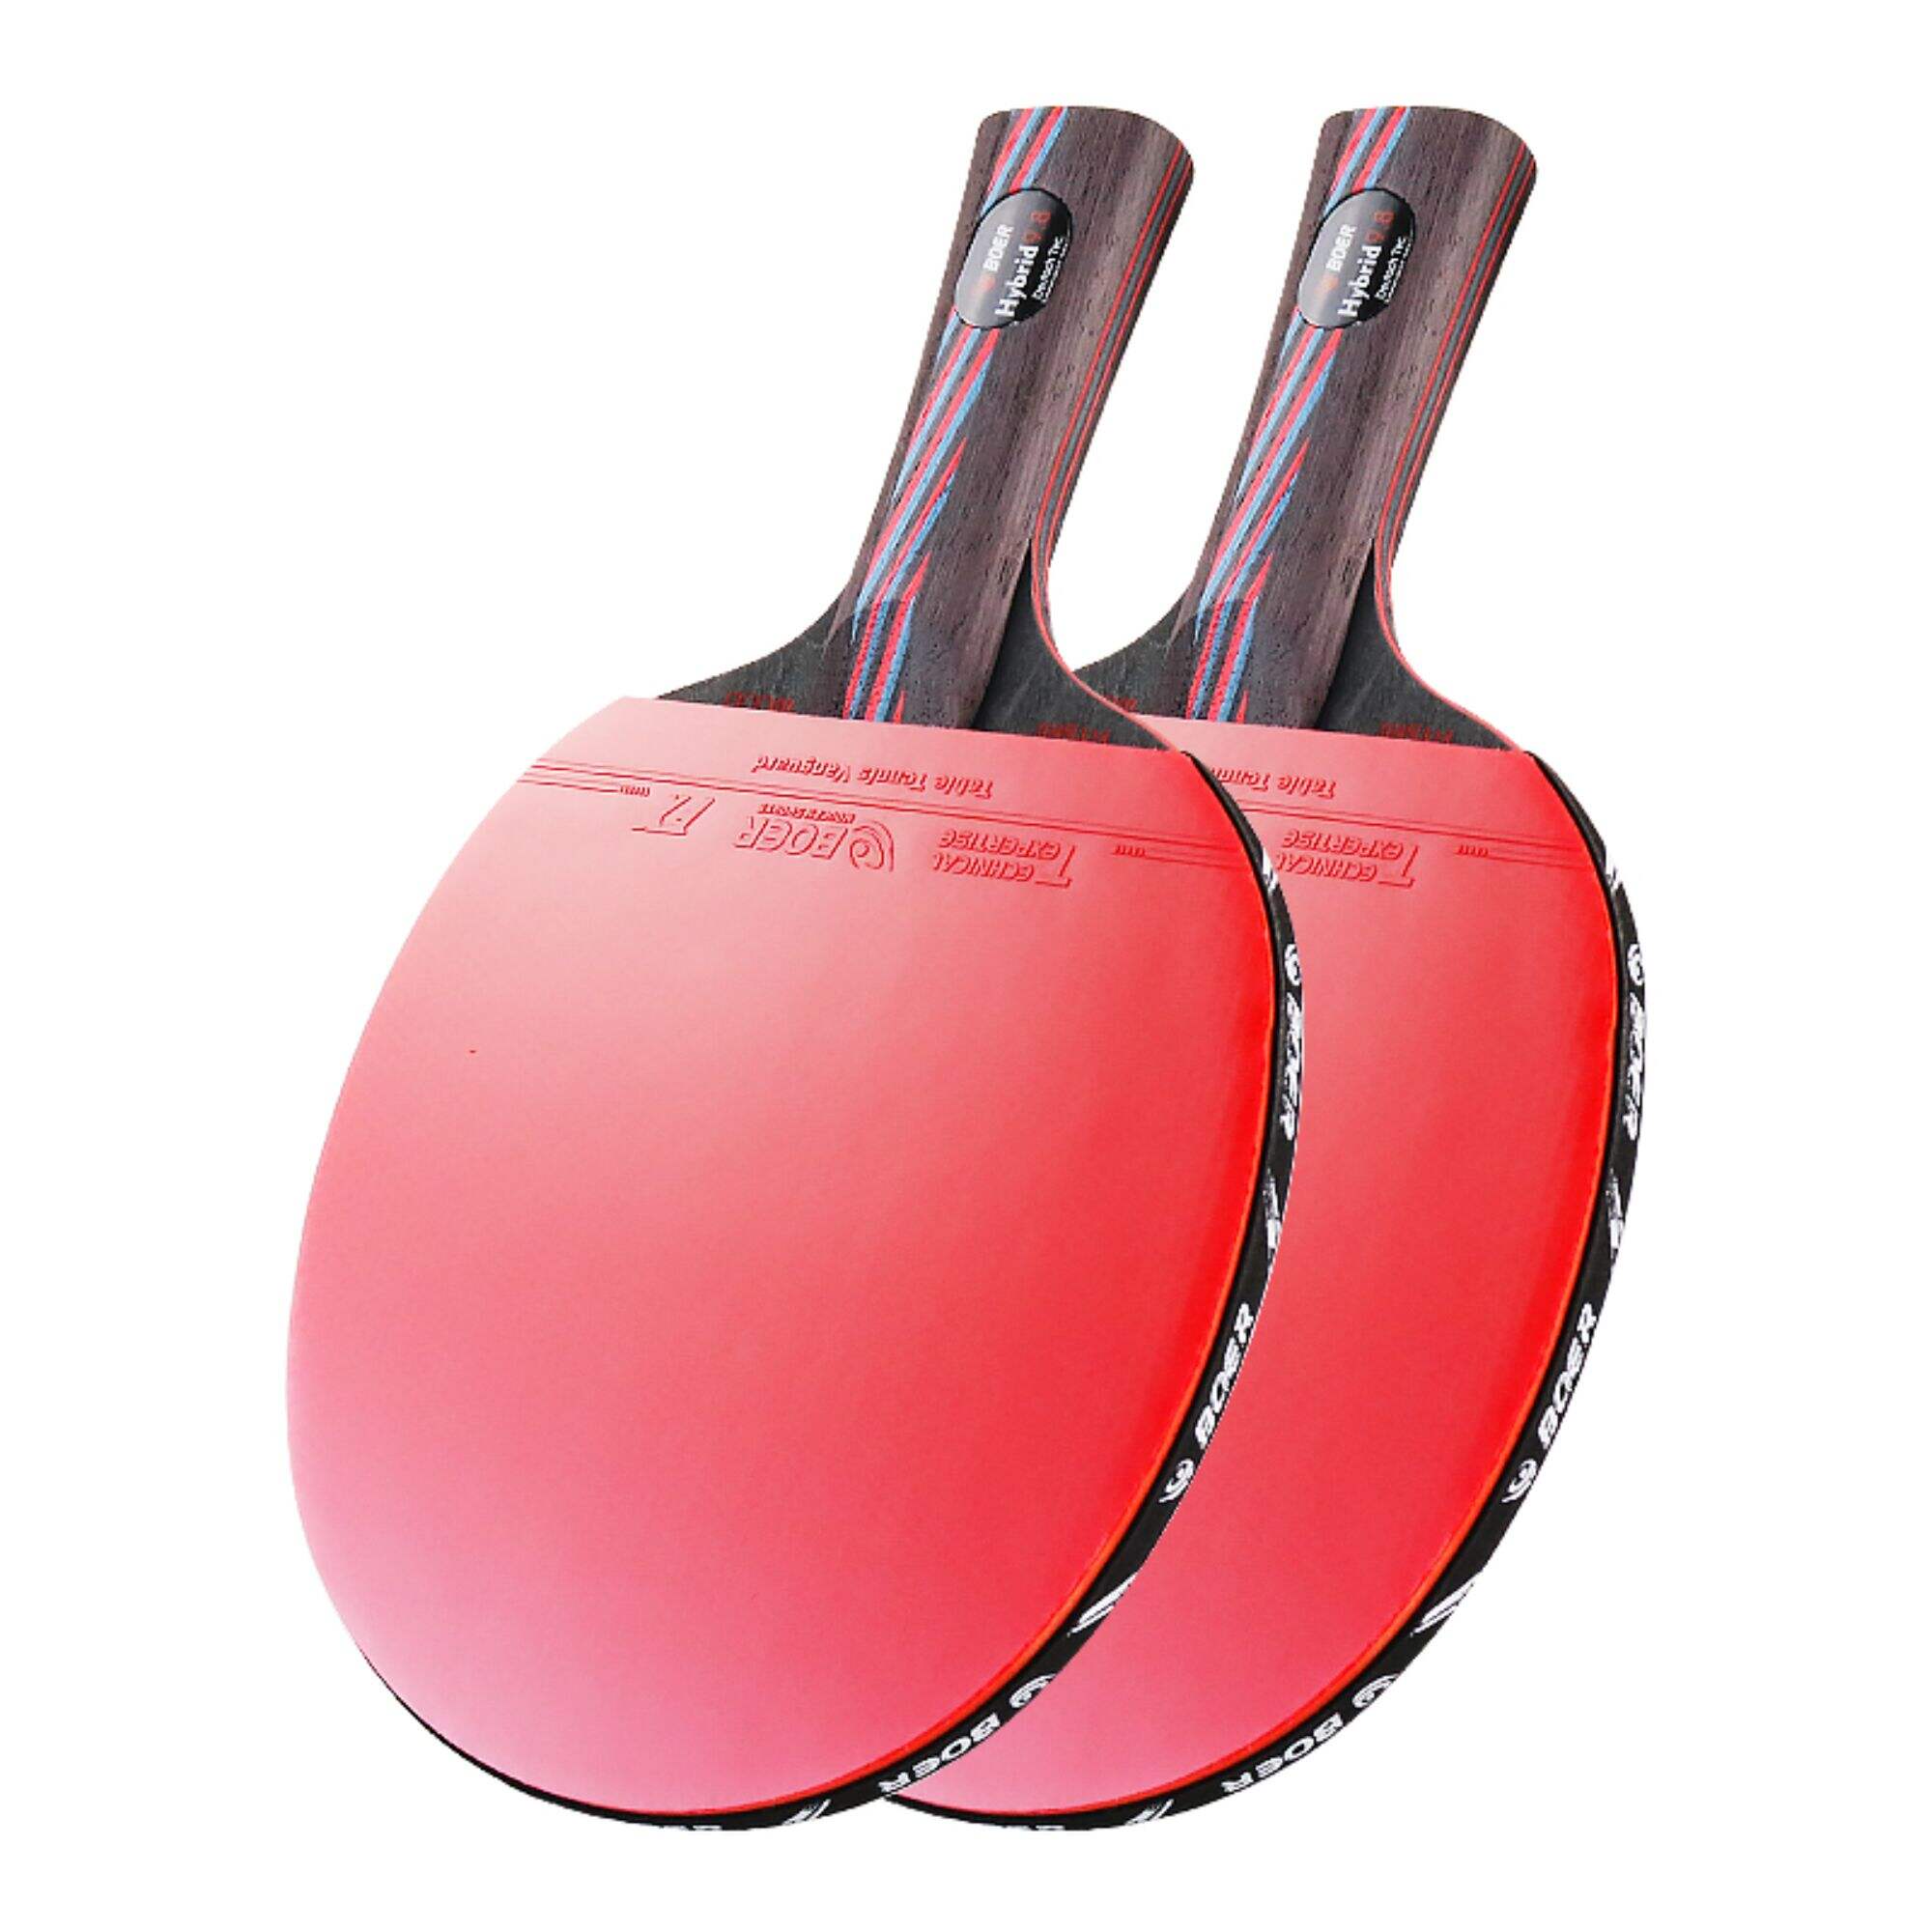 Boer S6-FX Series High-grade Table Tennis Rakcet/Bat/Paddle